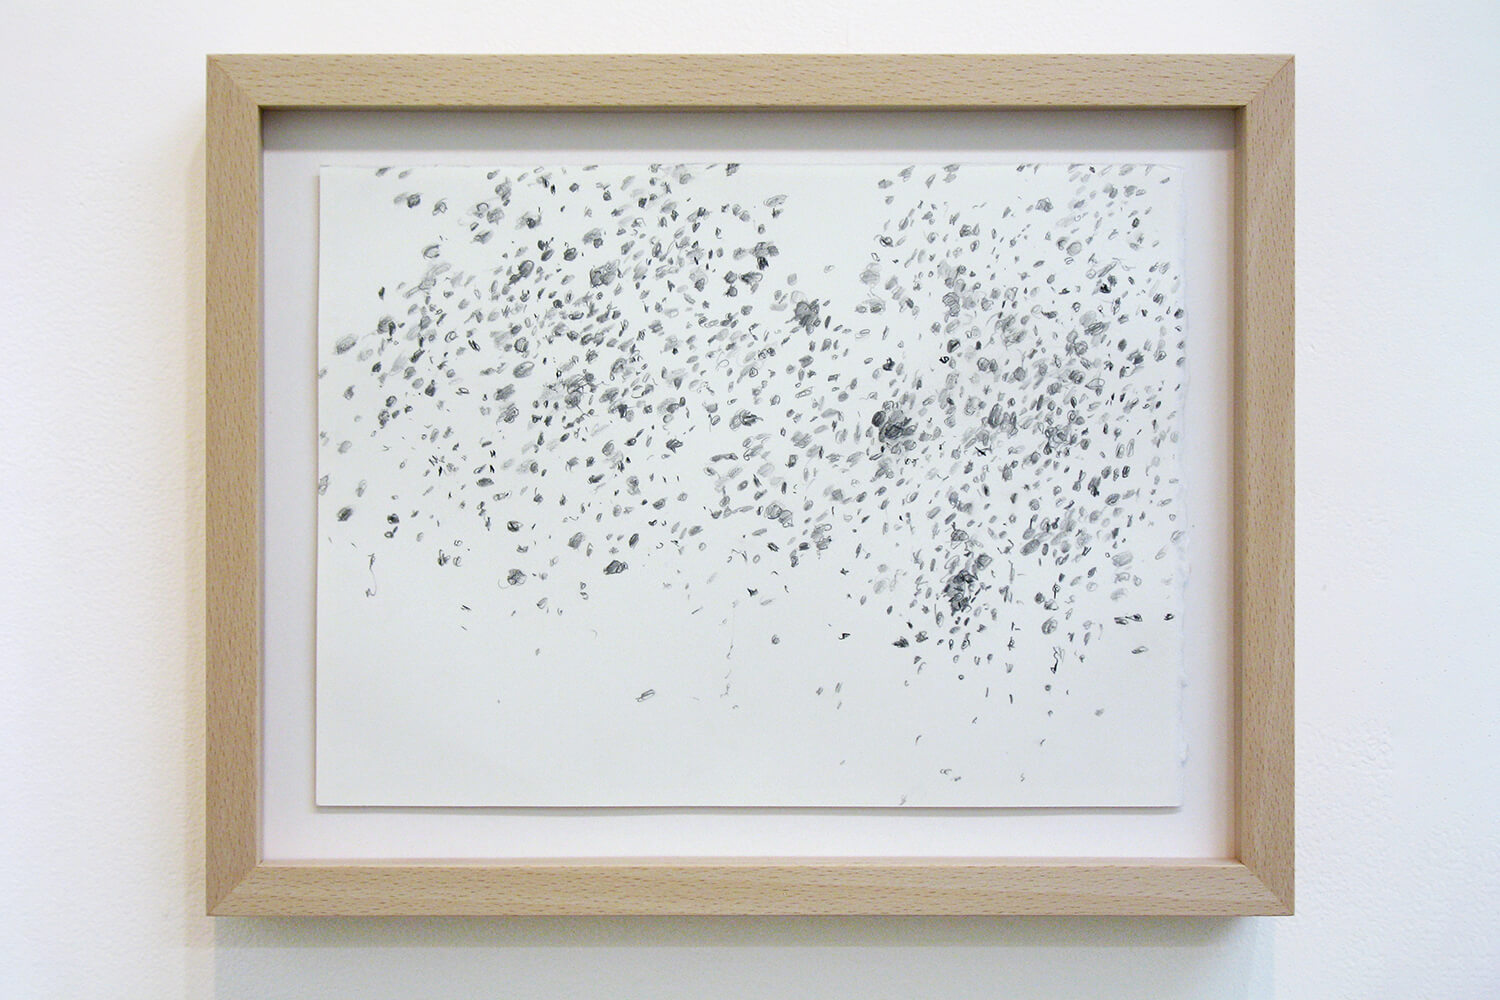 When the Dust Settles (d4)<br>Pencil on paper, 18.9 x 26 cm, 2010